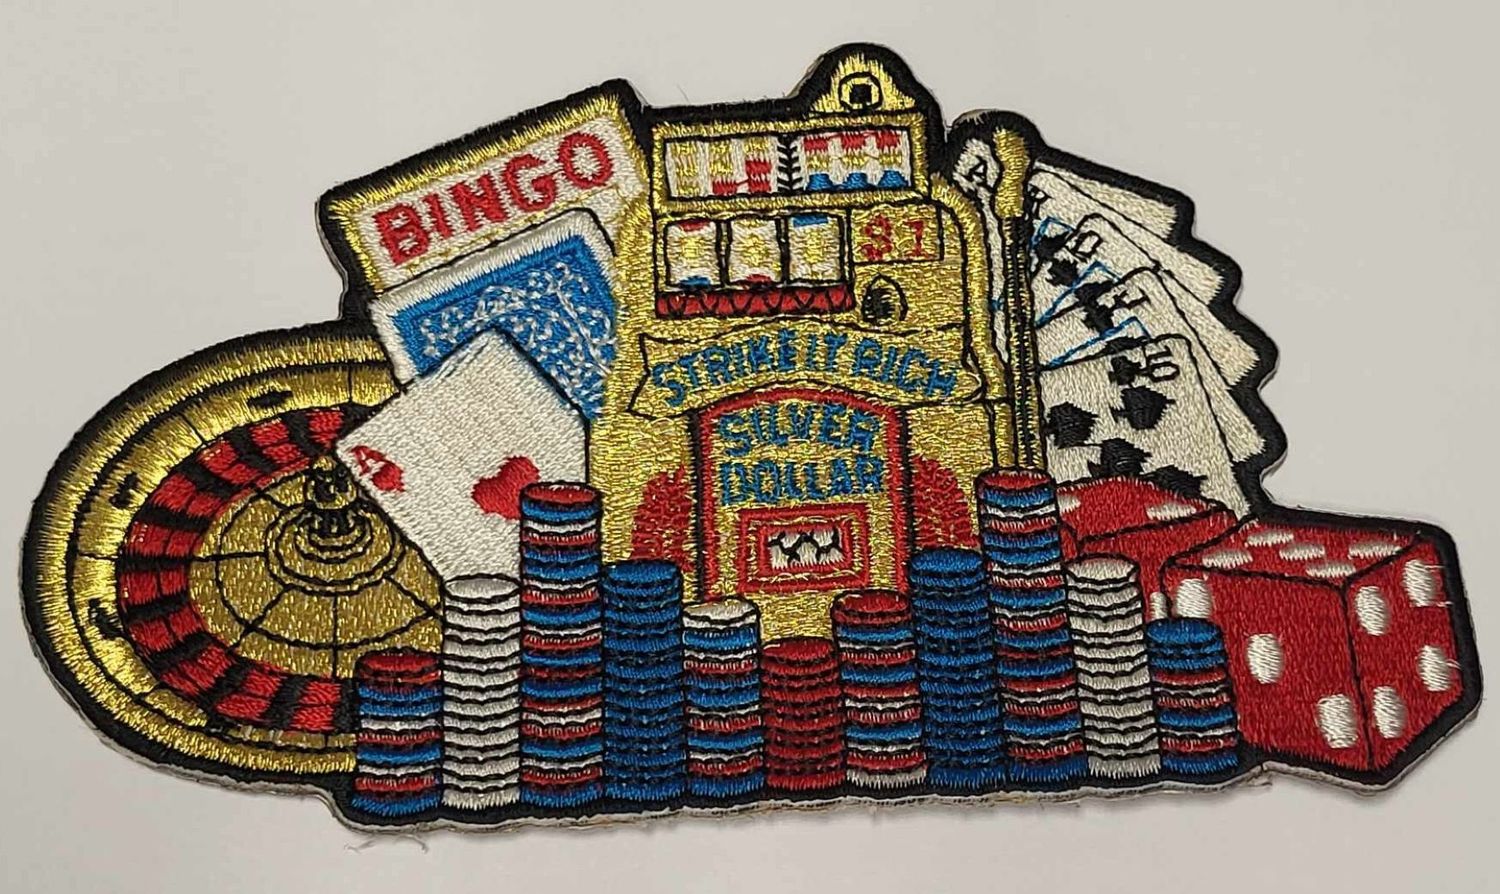 Casino Iron On Patch Slot Machine cards bingo roulette poker chips spades ace dice craps gambling